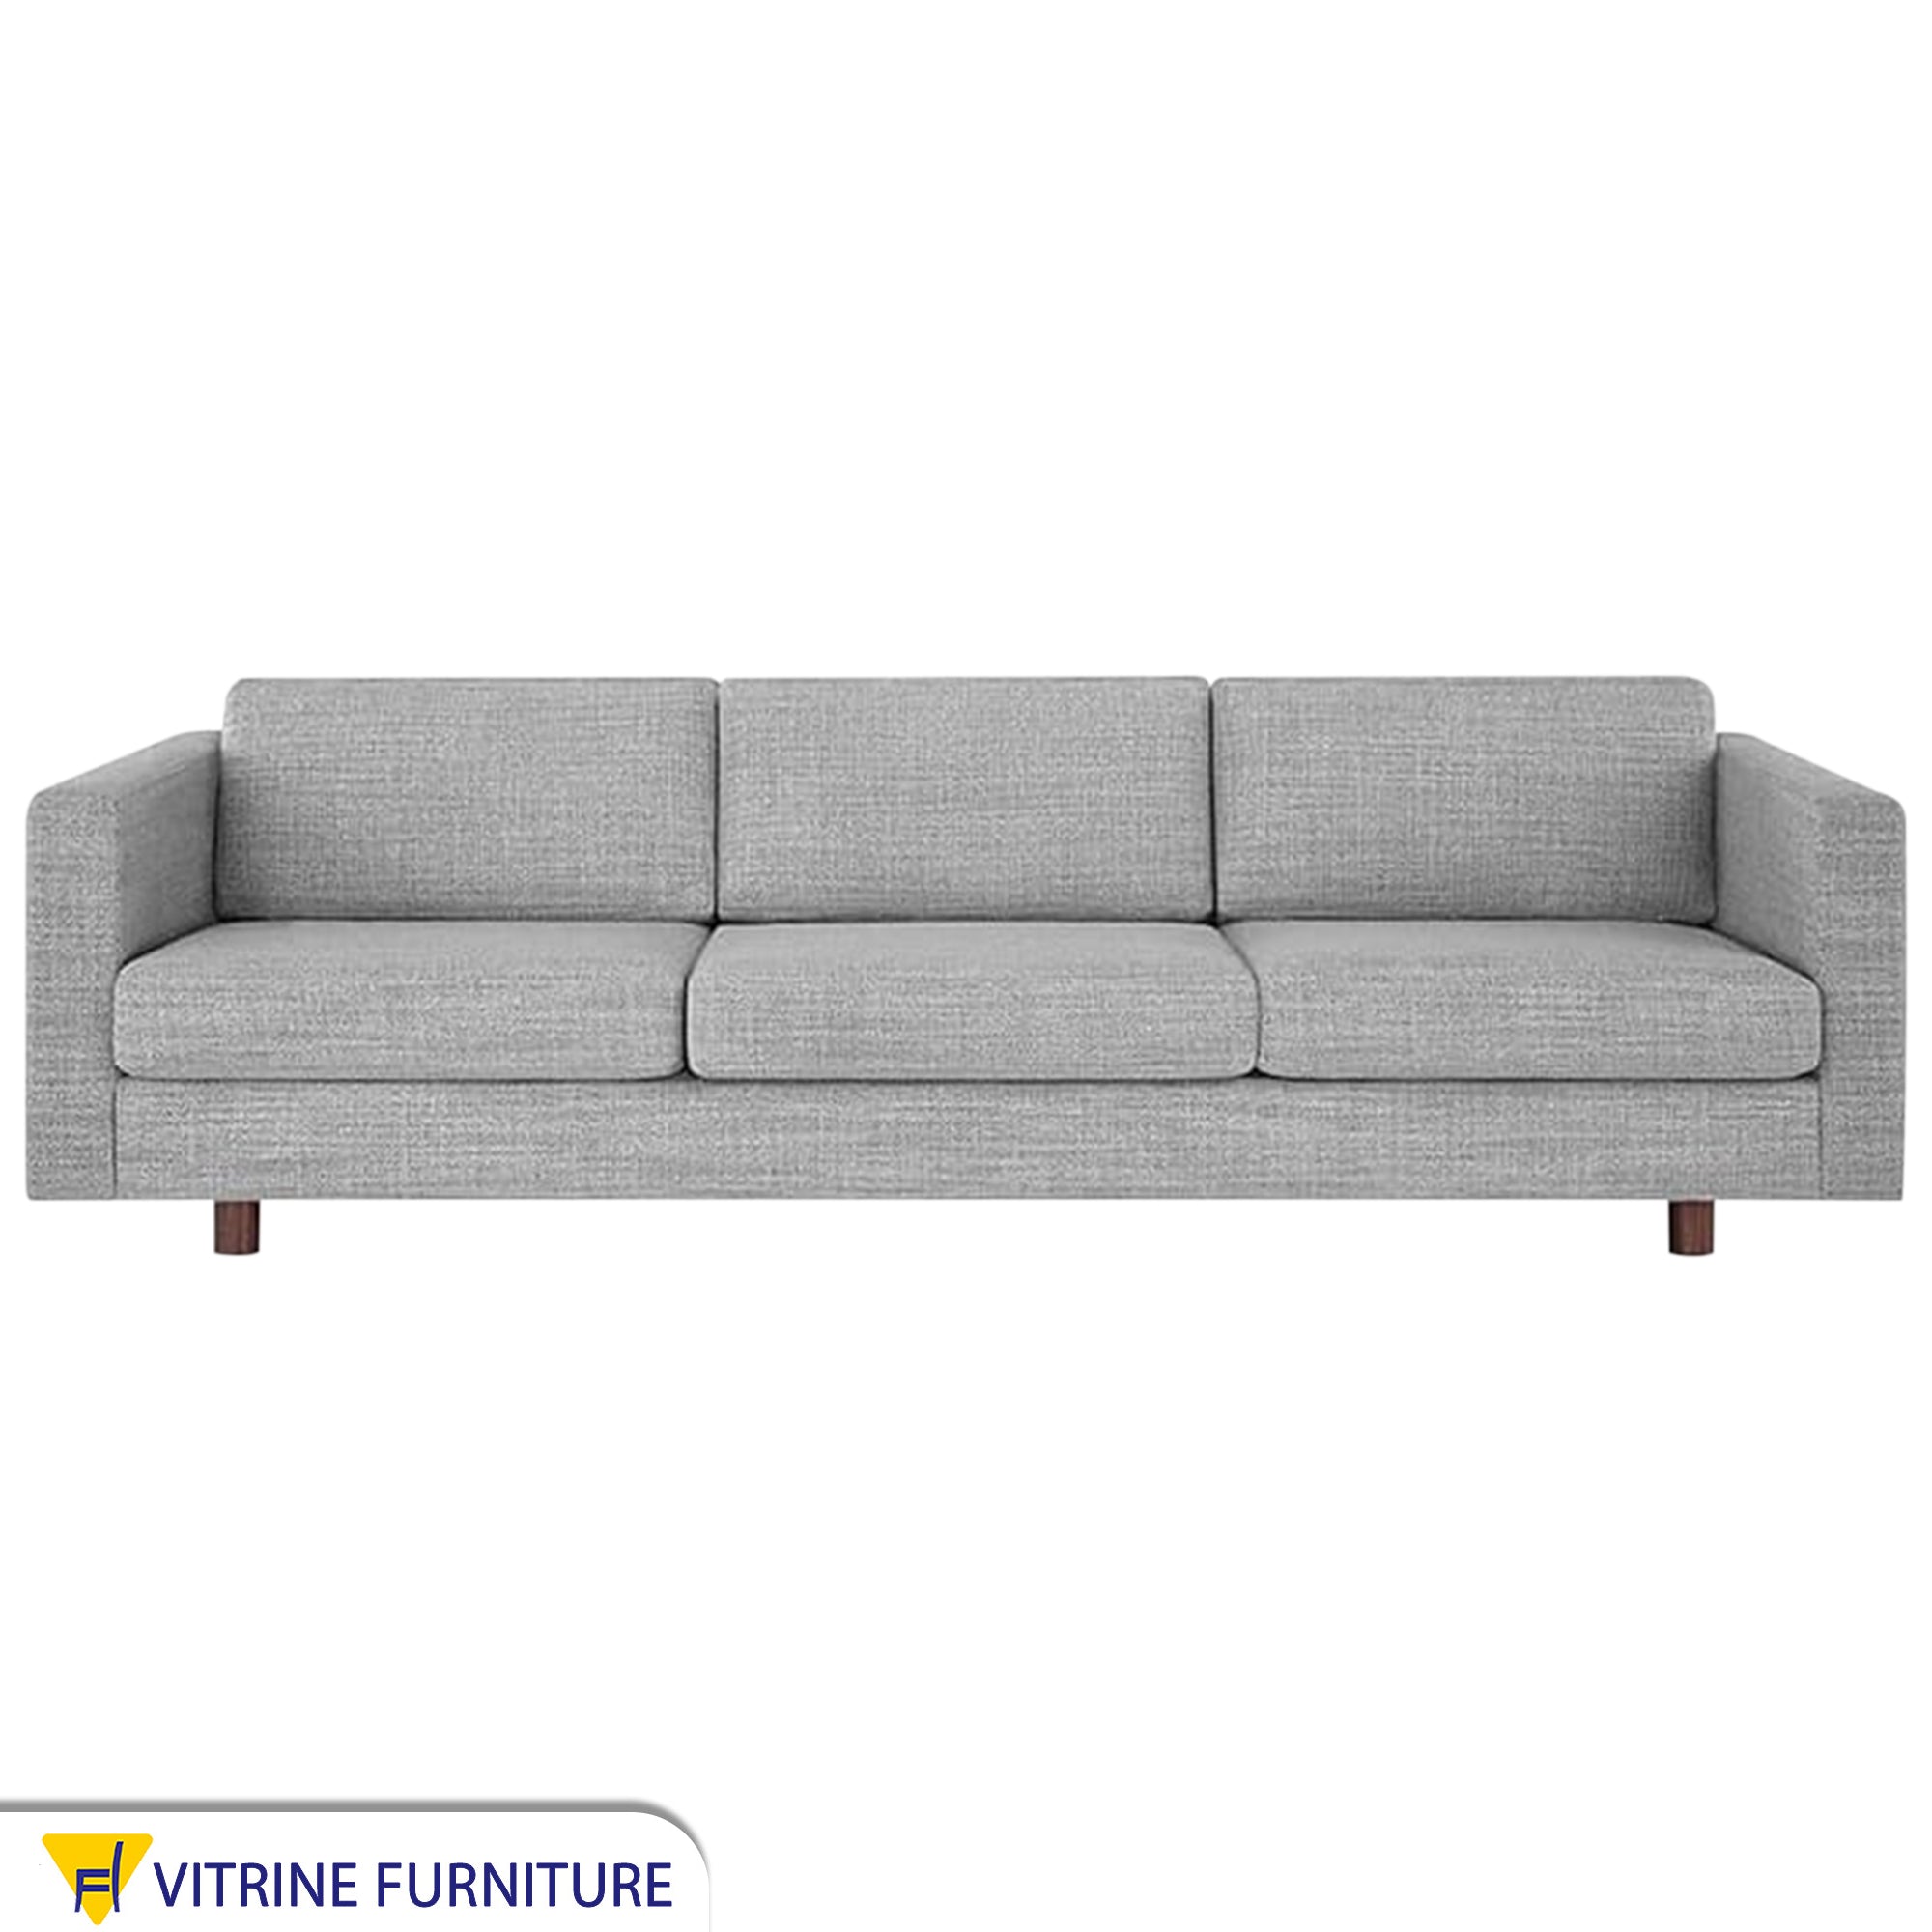 Triple sofa in light grey